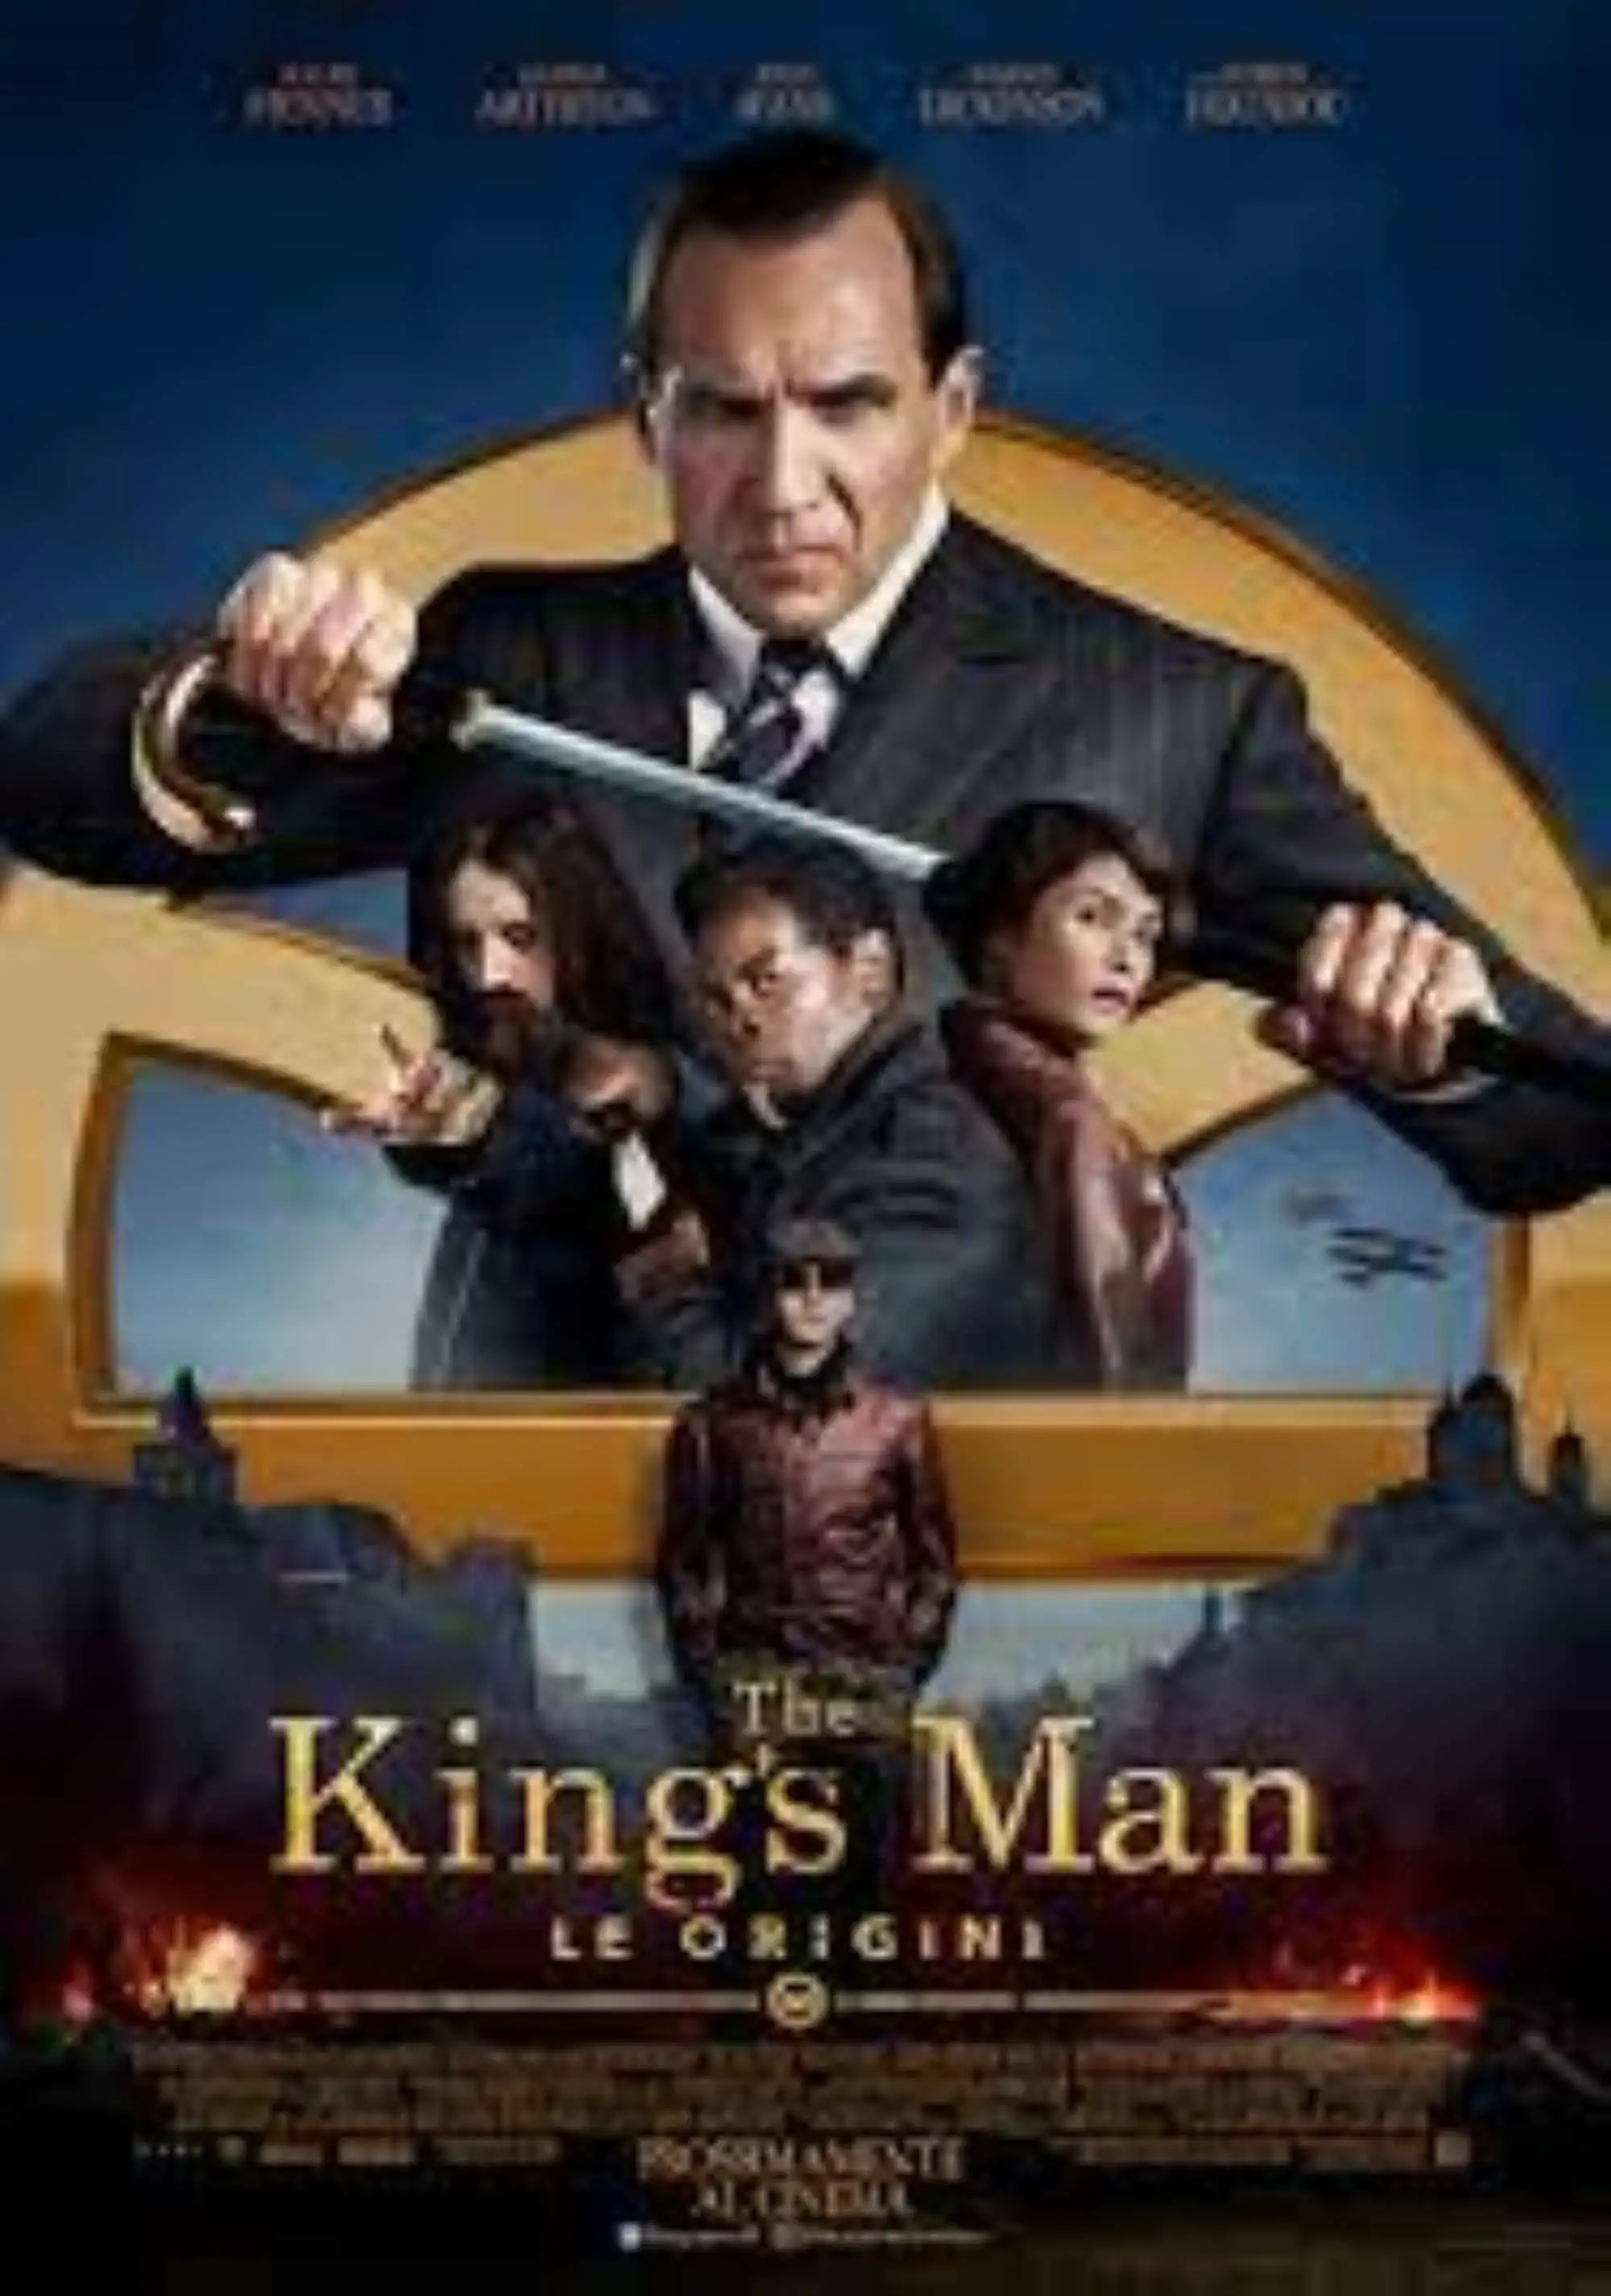 Cinema Odeon The King s Man Le Origini